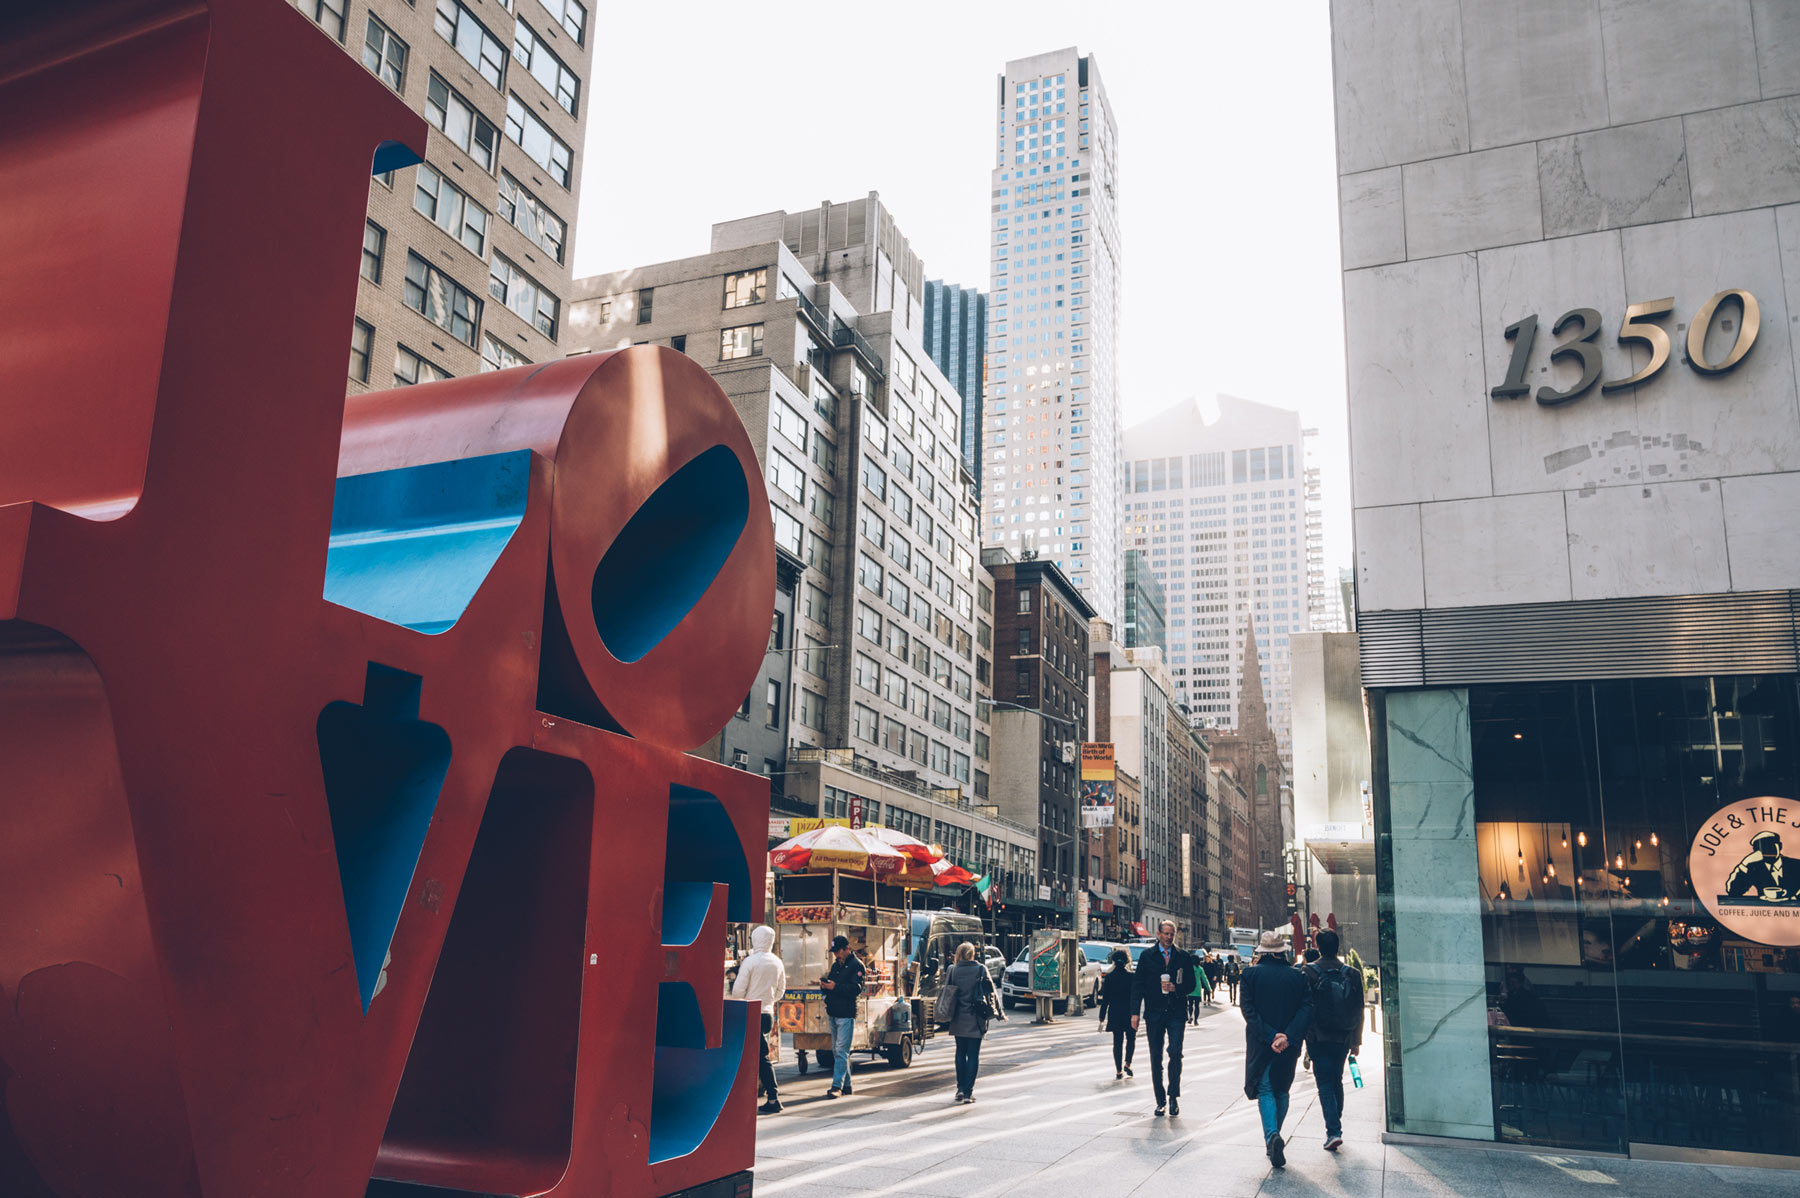 LOVE Sculpture, New York